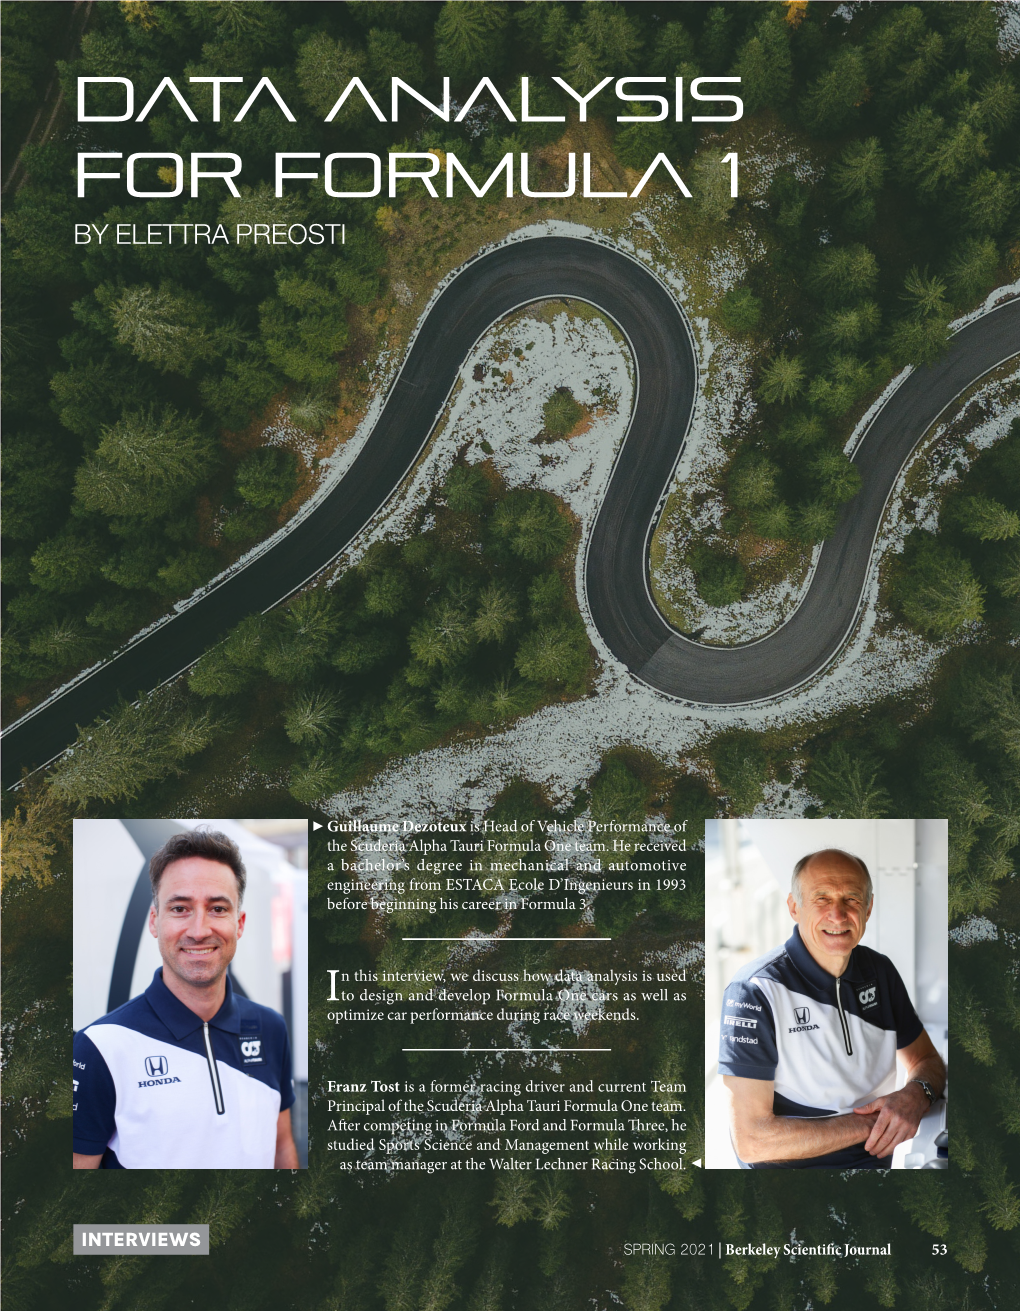 Data Analysis for Formula 1 by ELETTRA PREOSTI